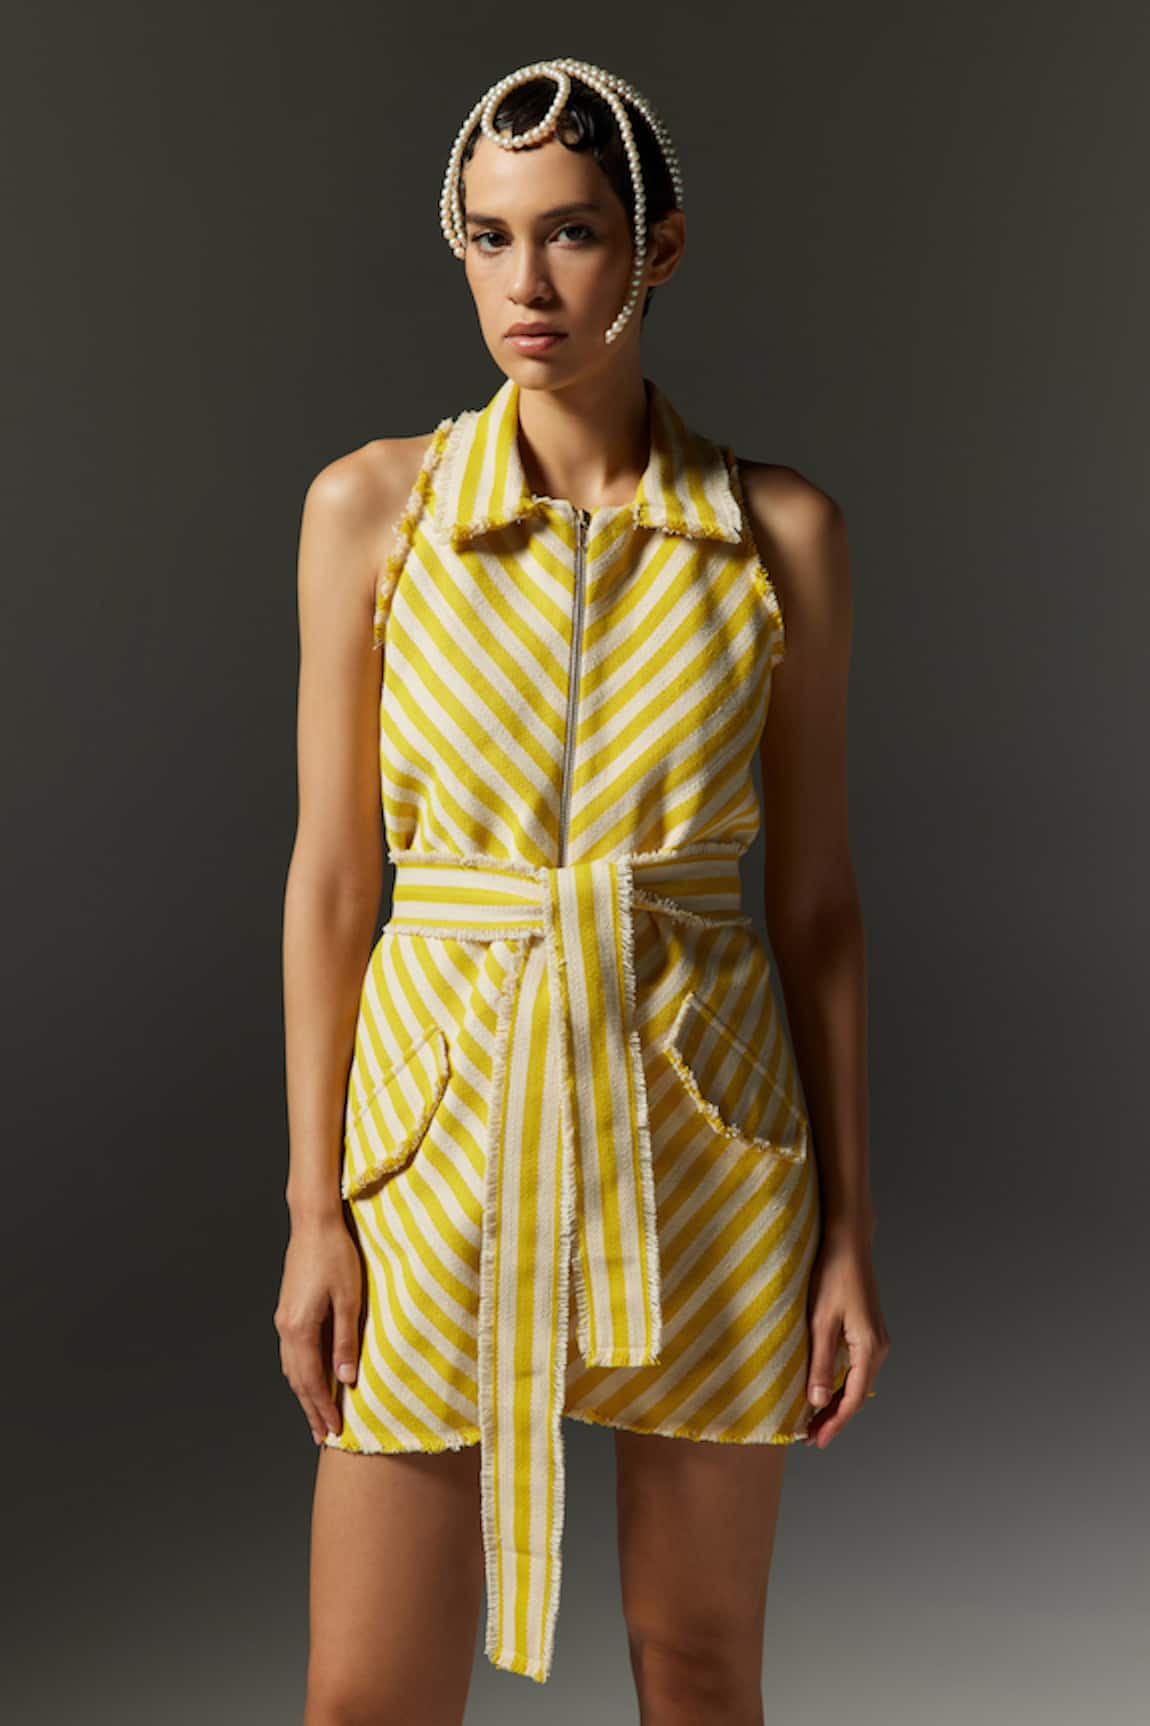 THE IASO Willa Stripe Pattern Dress